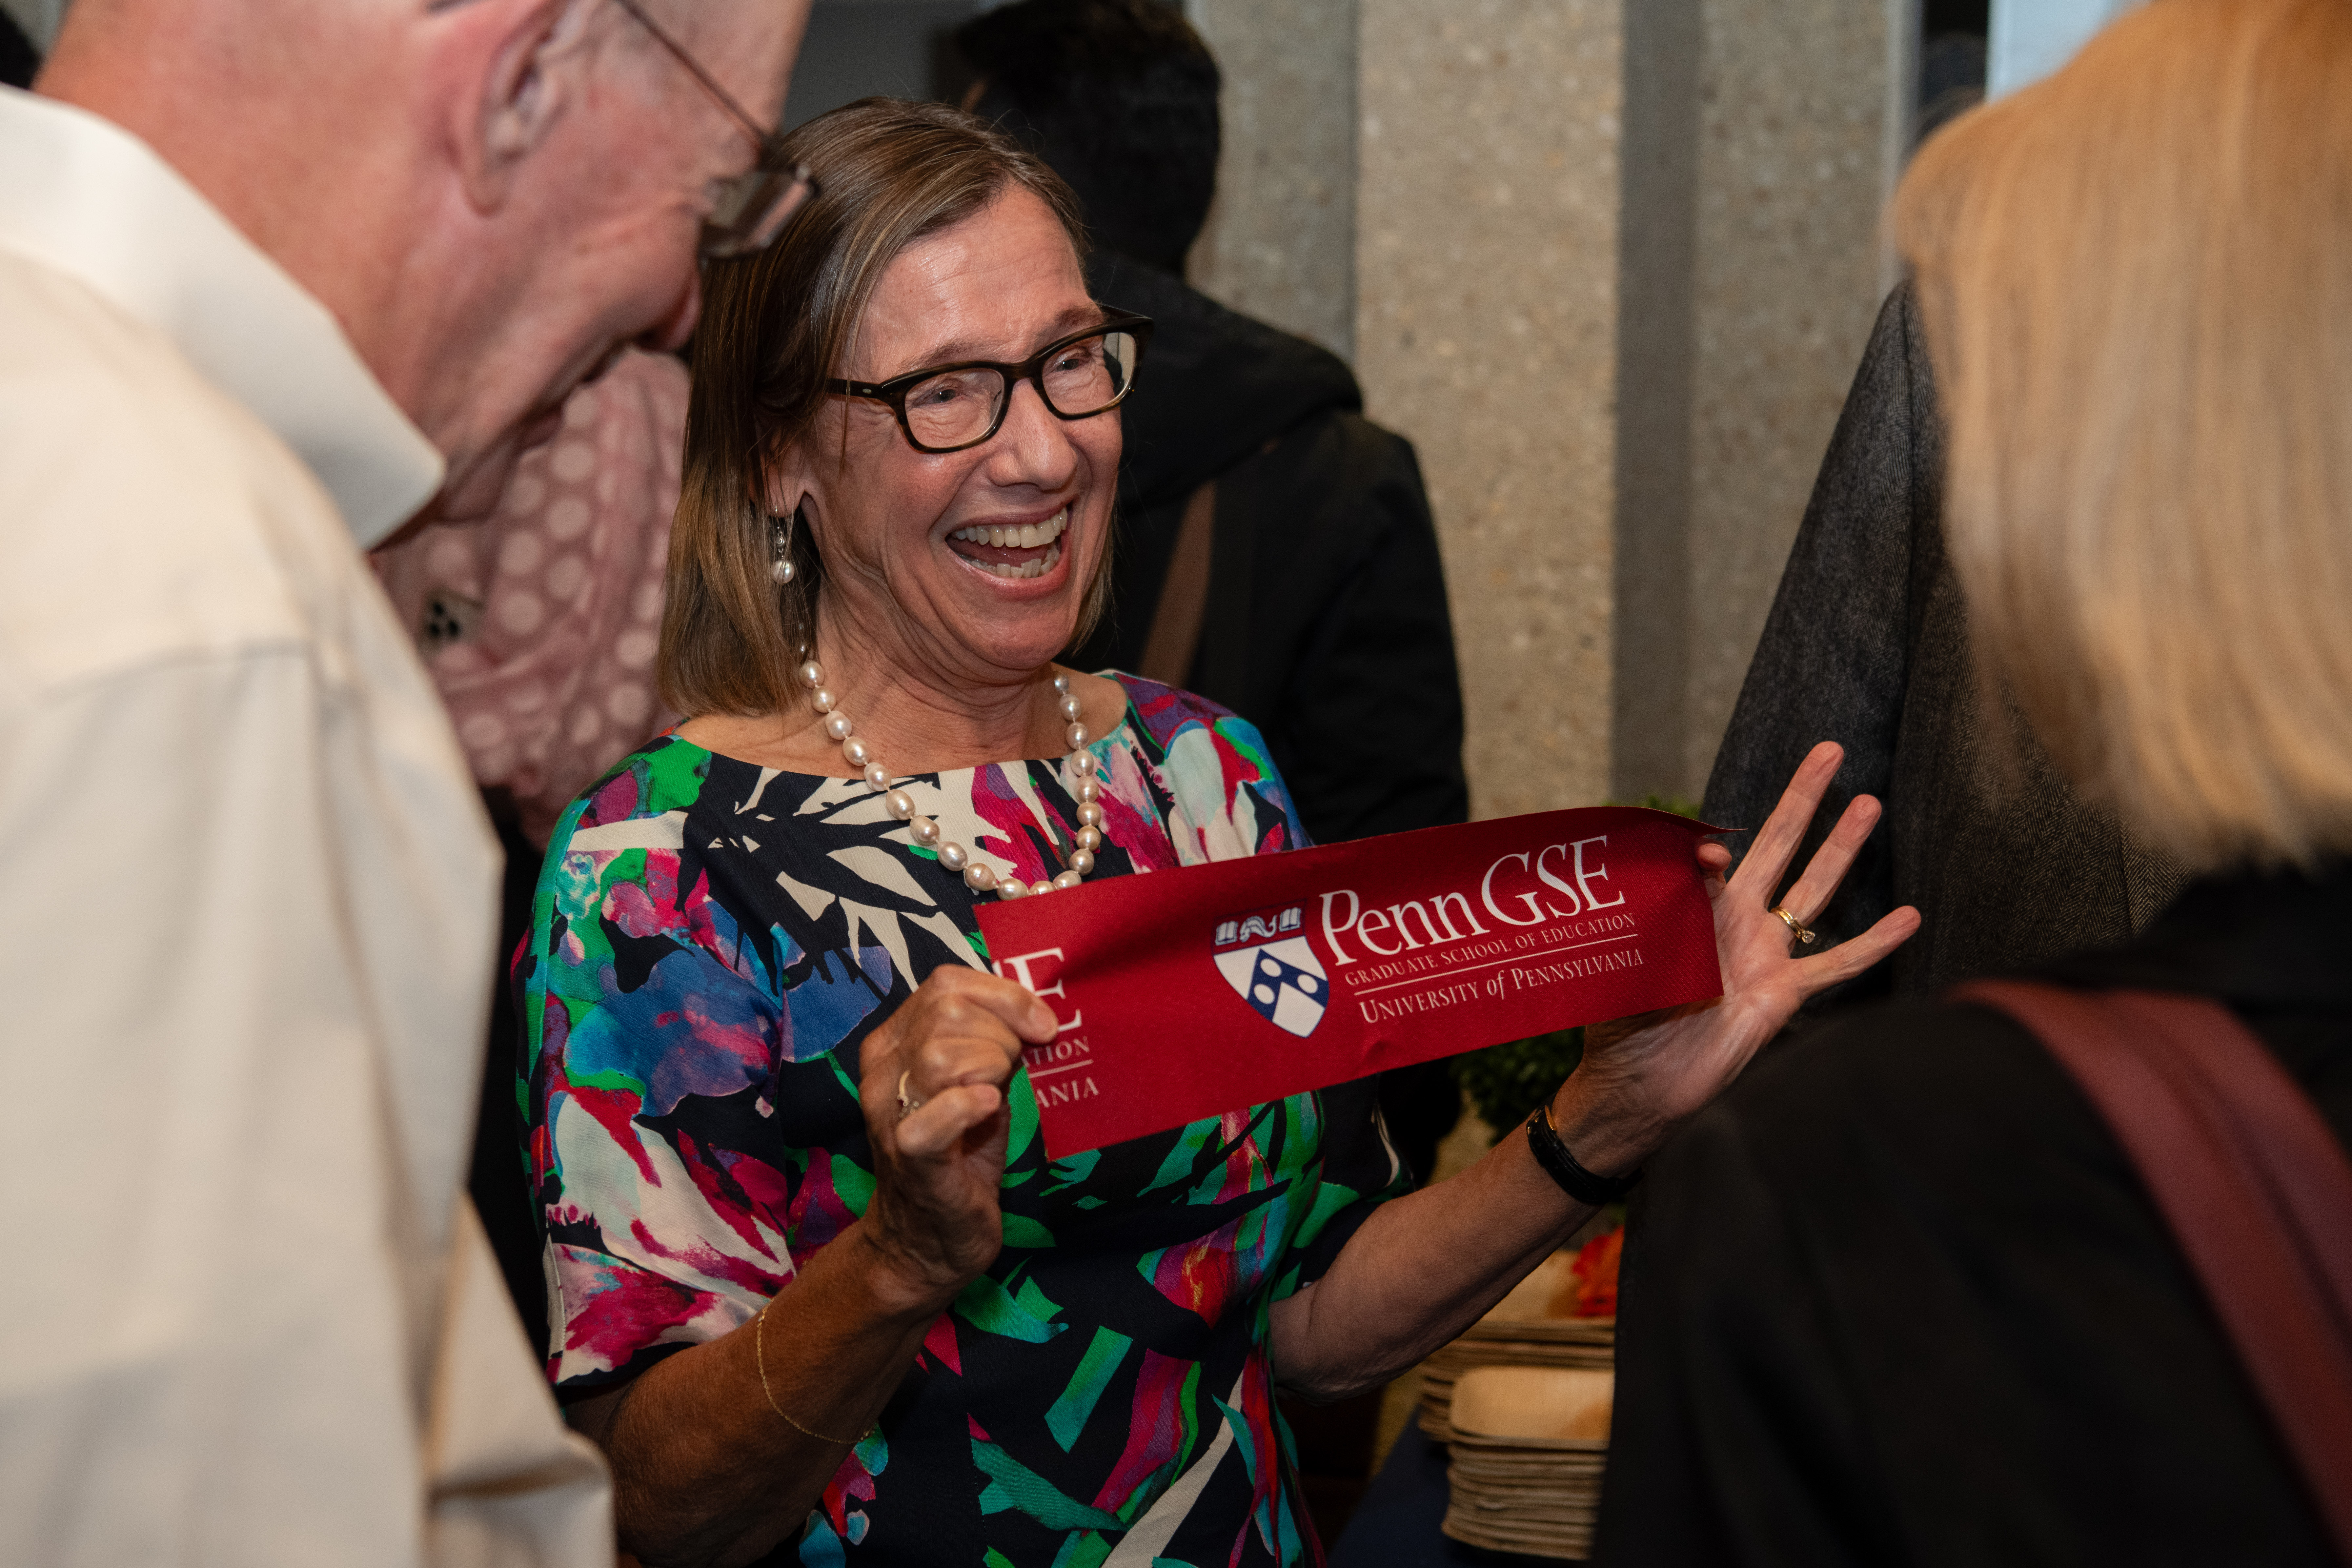 Penn GSE dean Pam Grossman smiles holding a piece of ribbon.